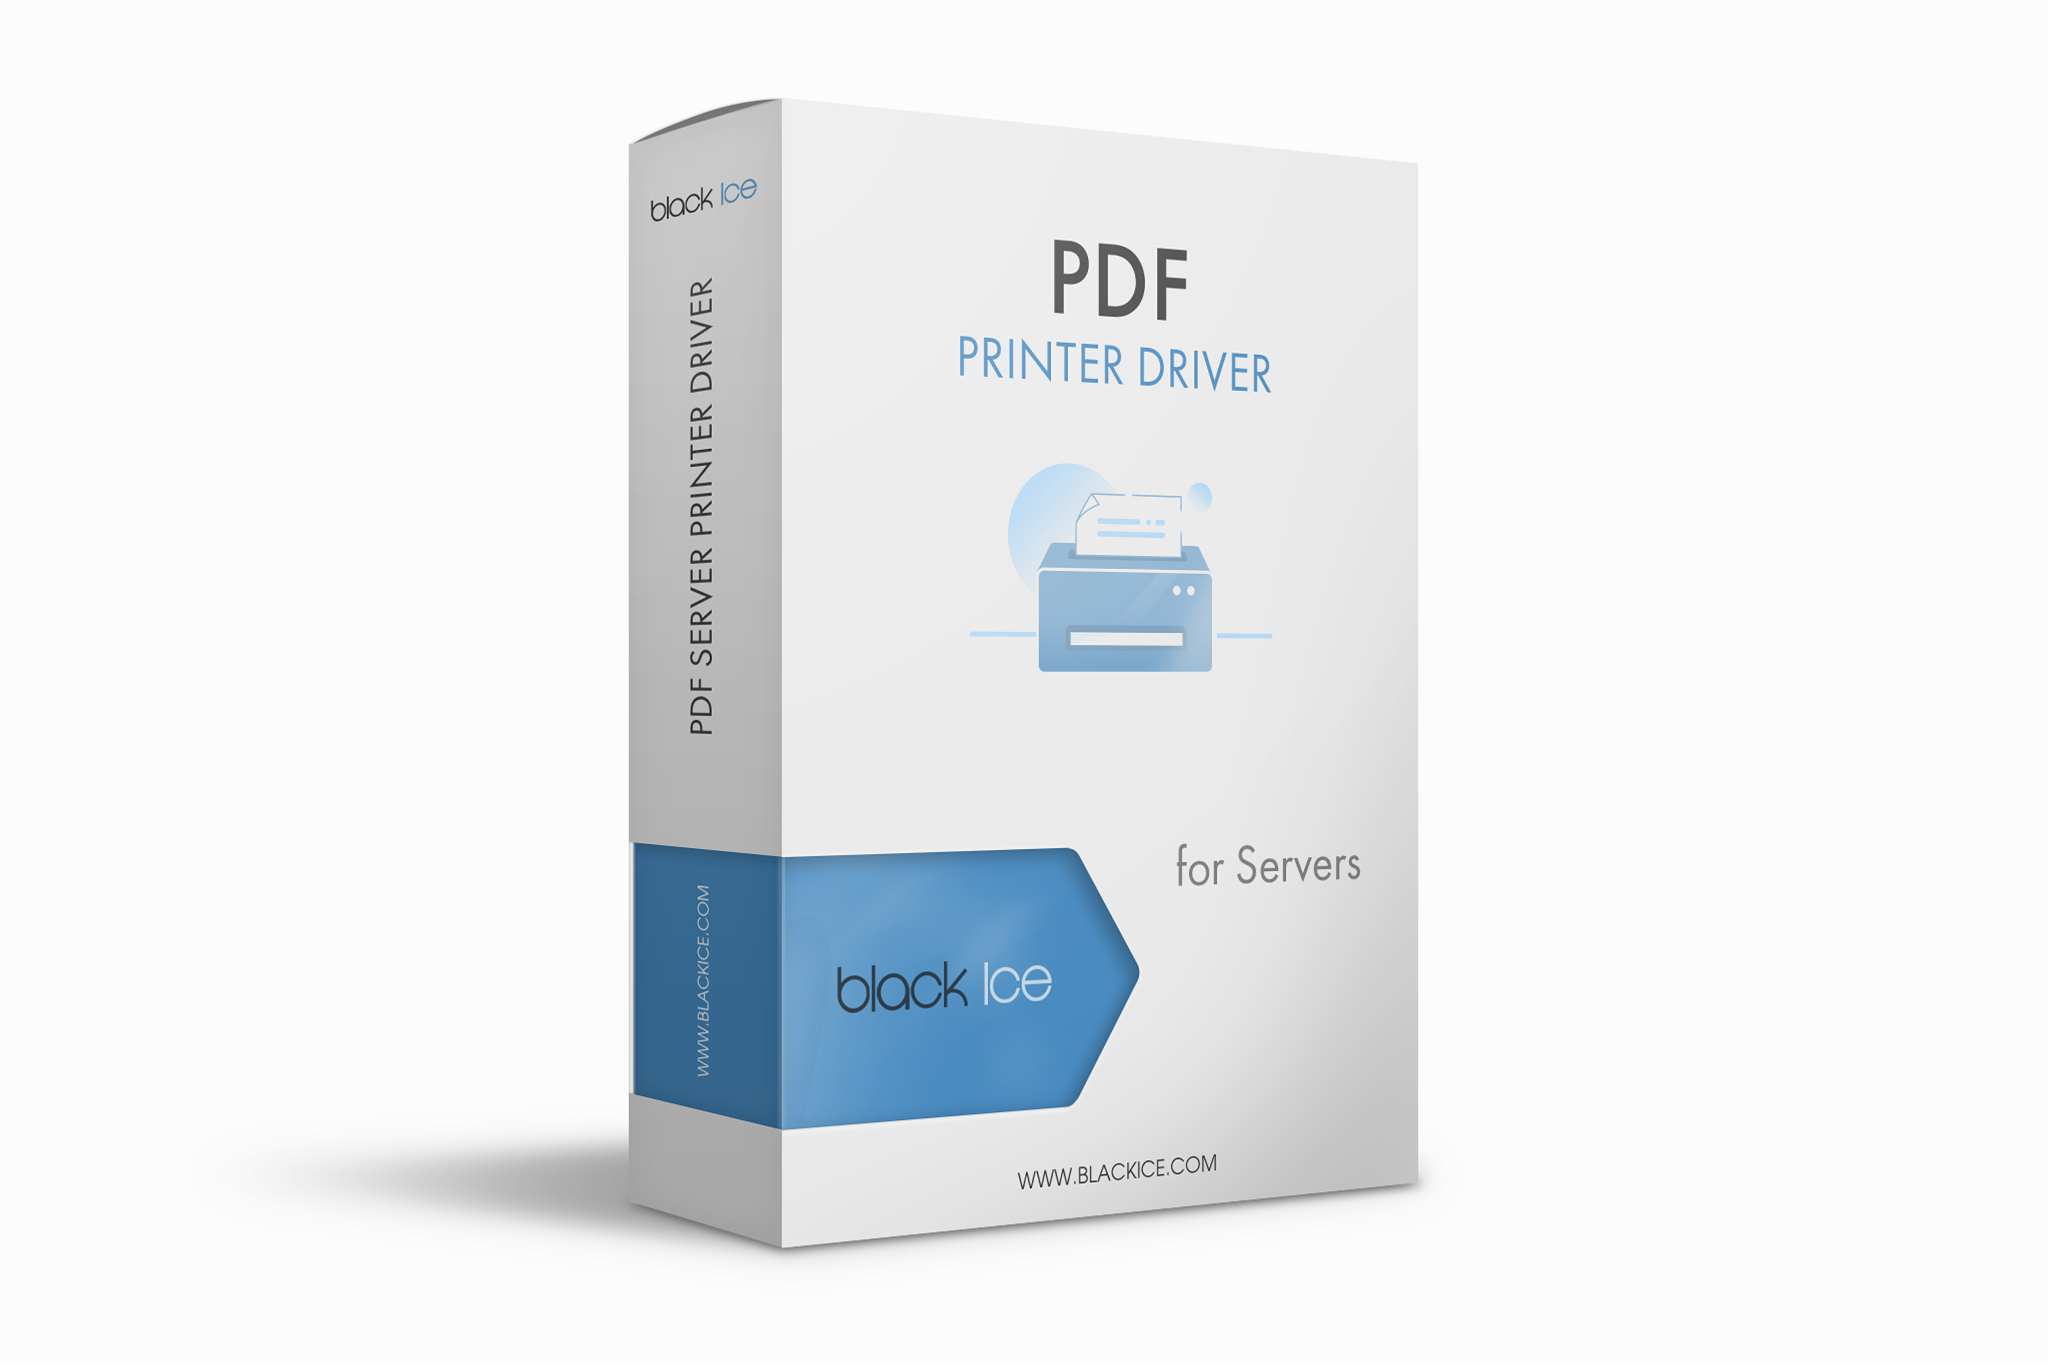 PDF Printer Driver Server Subscription (Single Server and 4 multi-printers or ports)